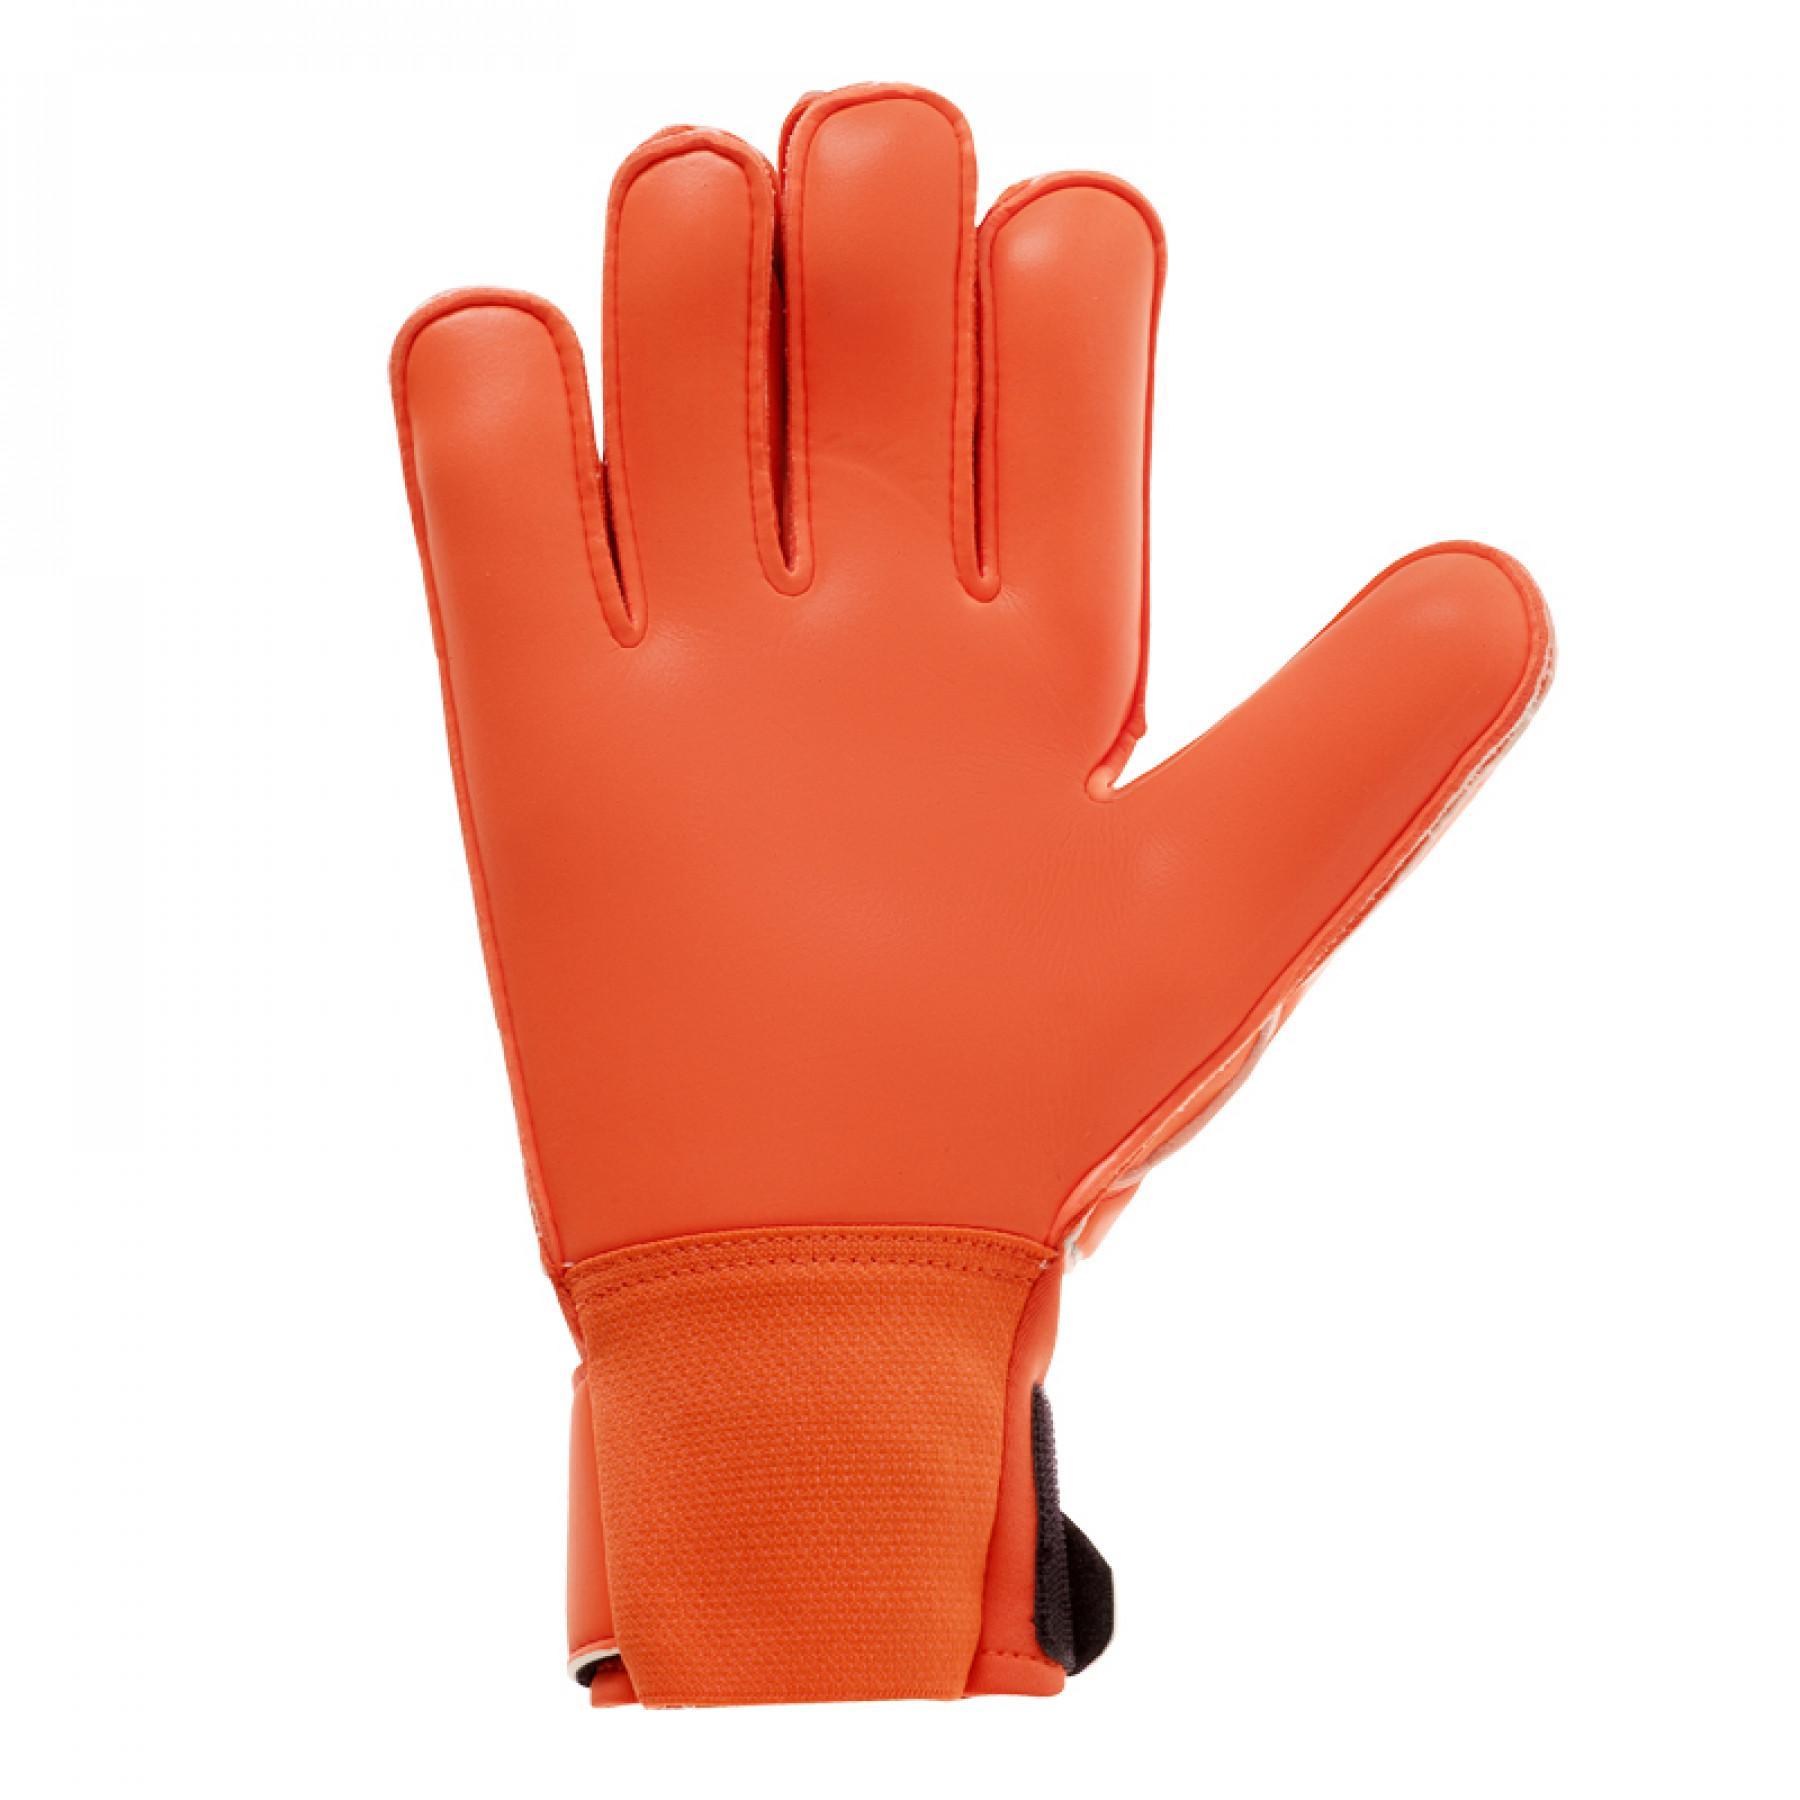 Goalkeeper gloves Uhlsport Aerored Soft Pro